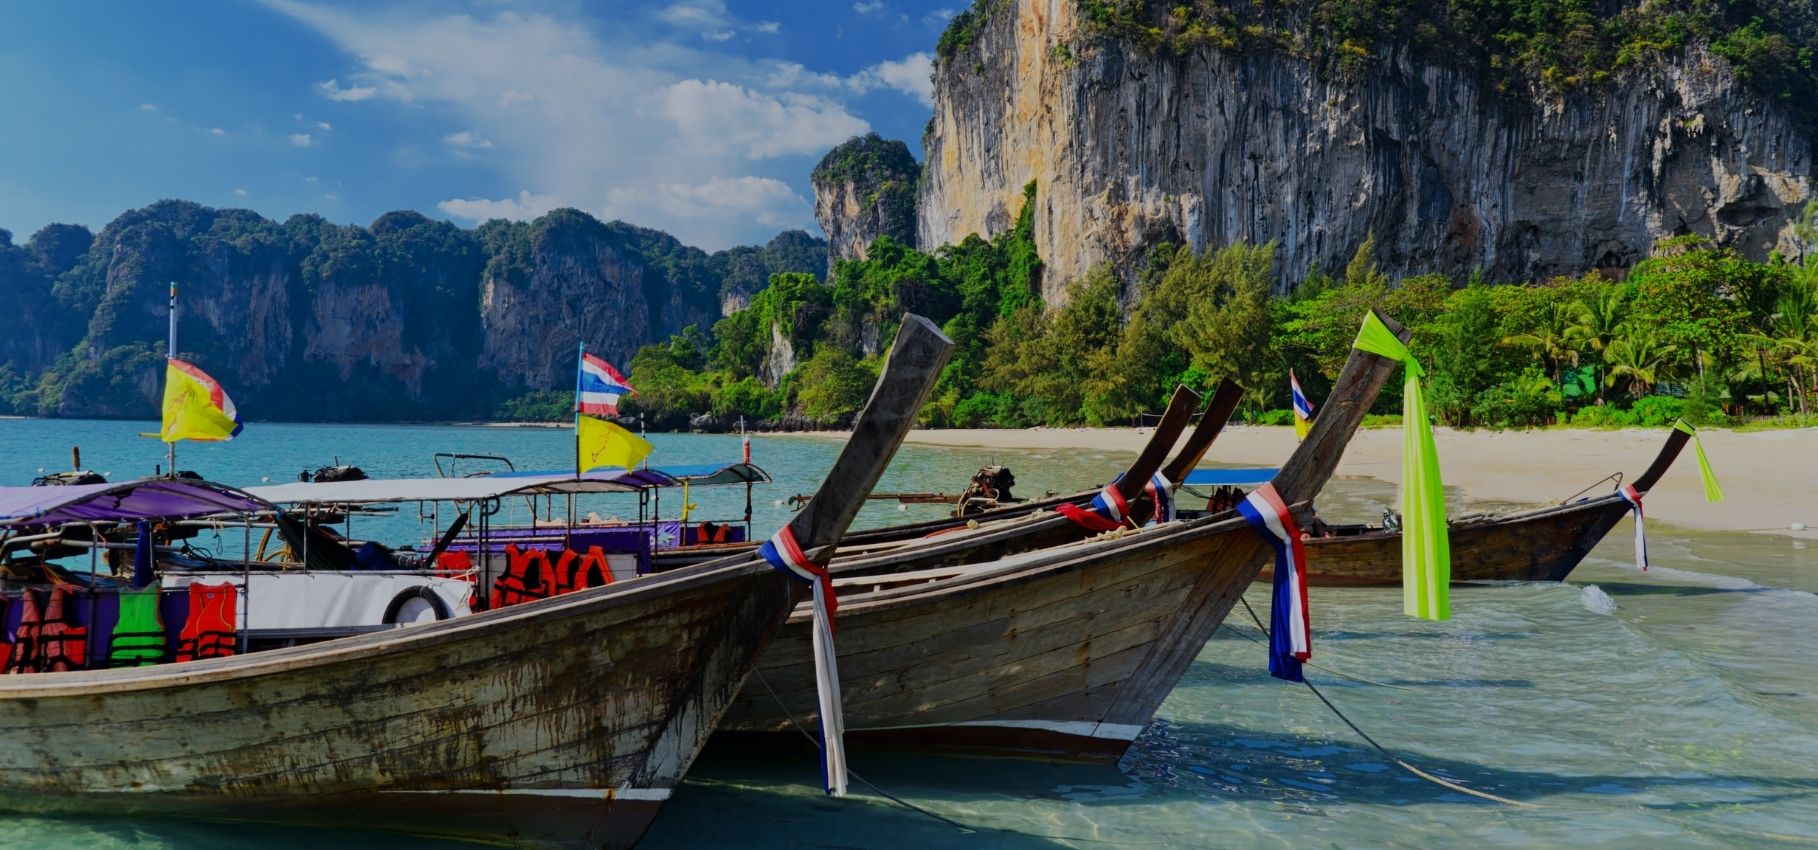 Places to visit in Krabi, Thailand